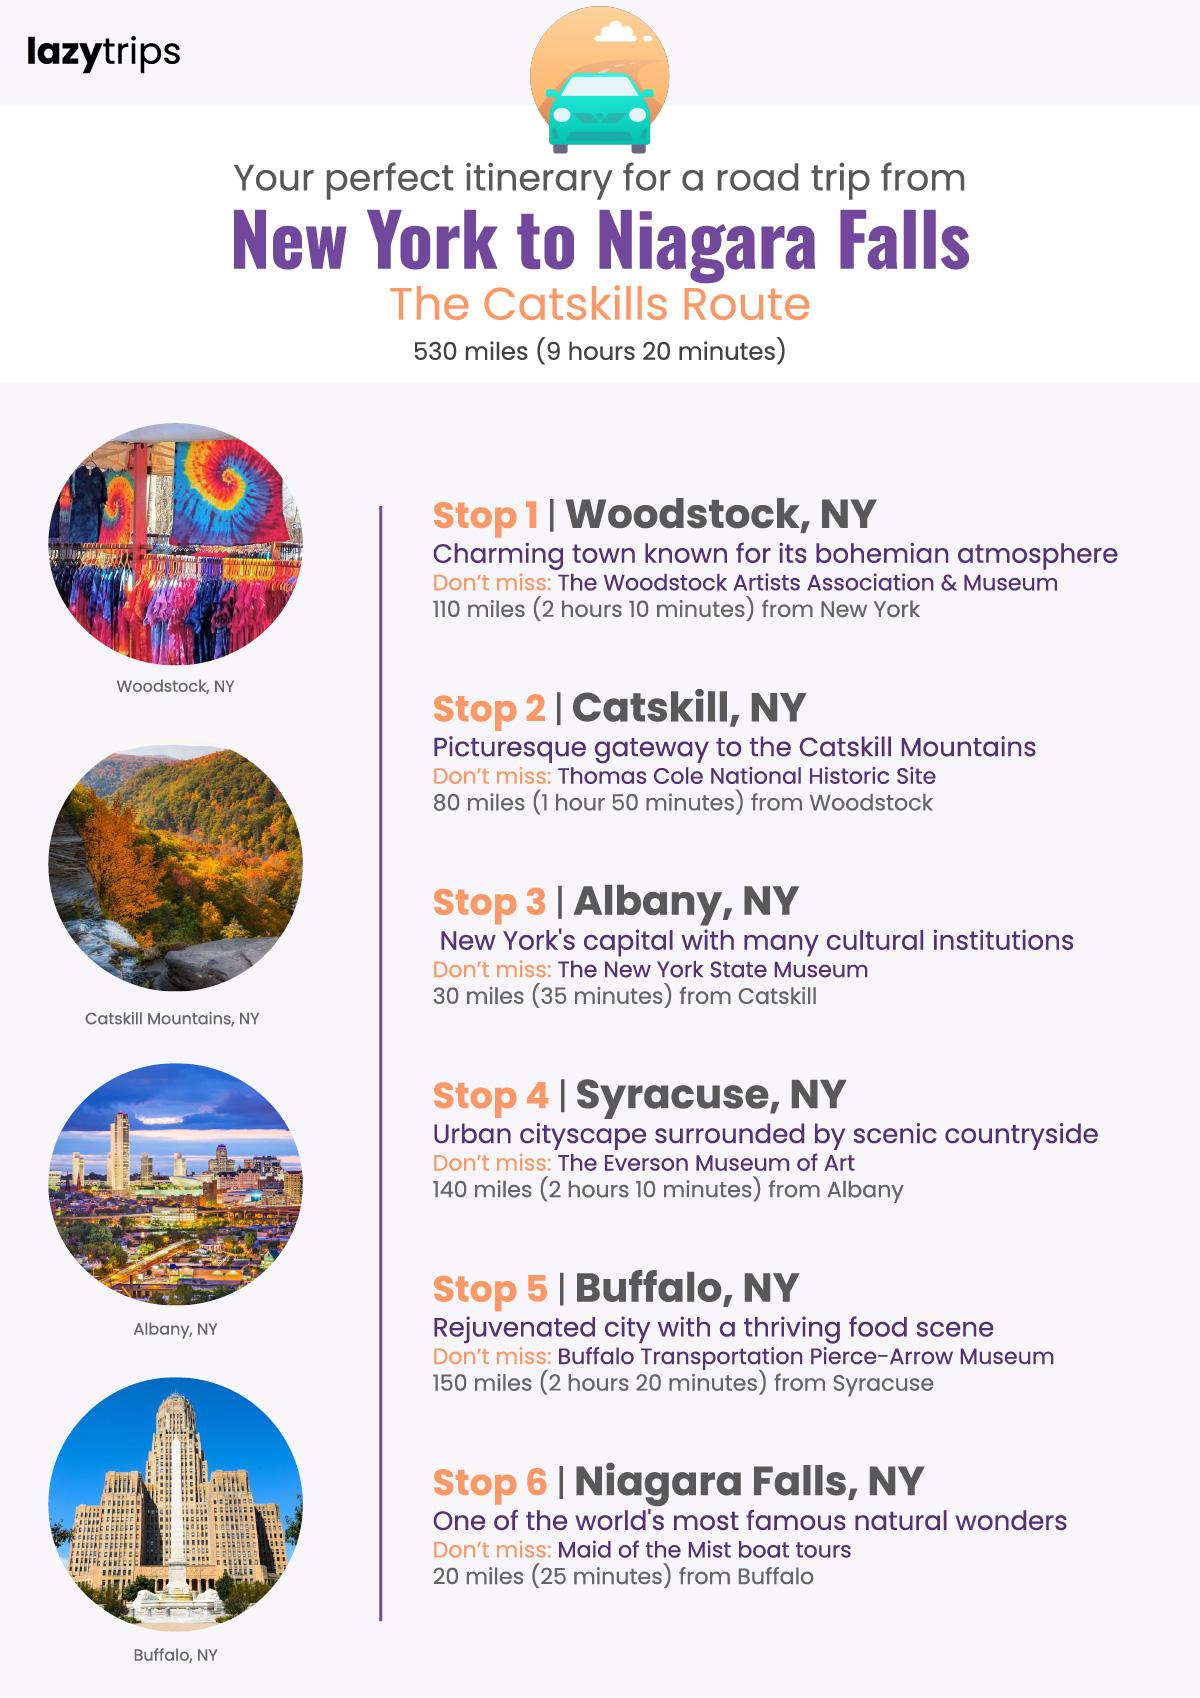 Itinerary for a road trip from New York to Niagara Falls, stopping in Woodstock, Catskill, Albany, Syracuse, Buffalo and Niagara Falls